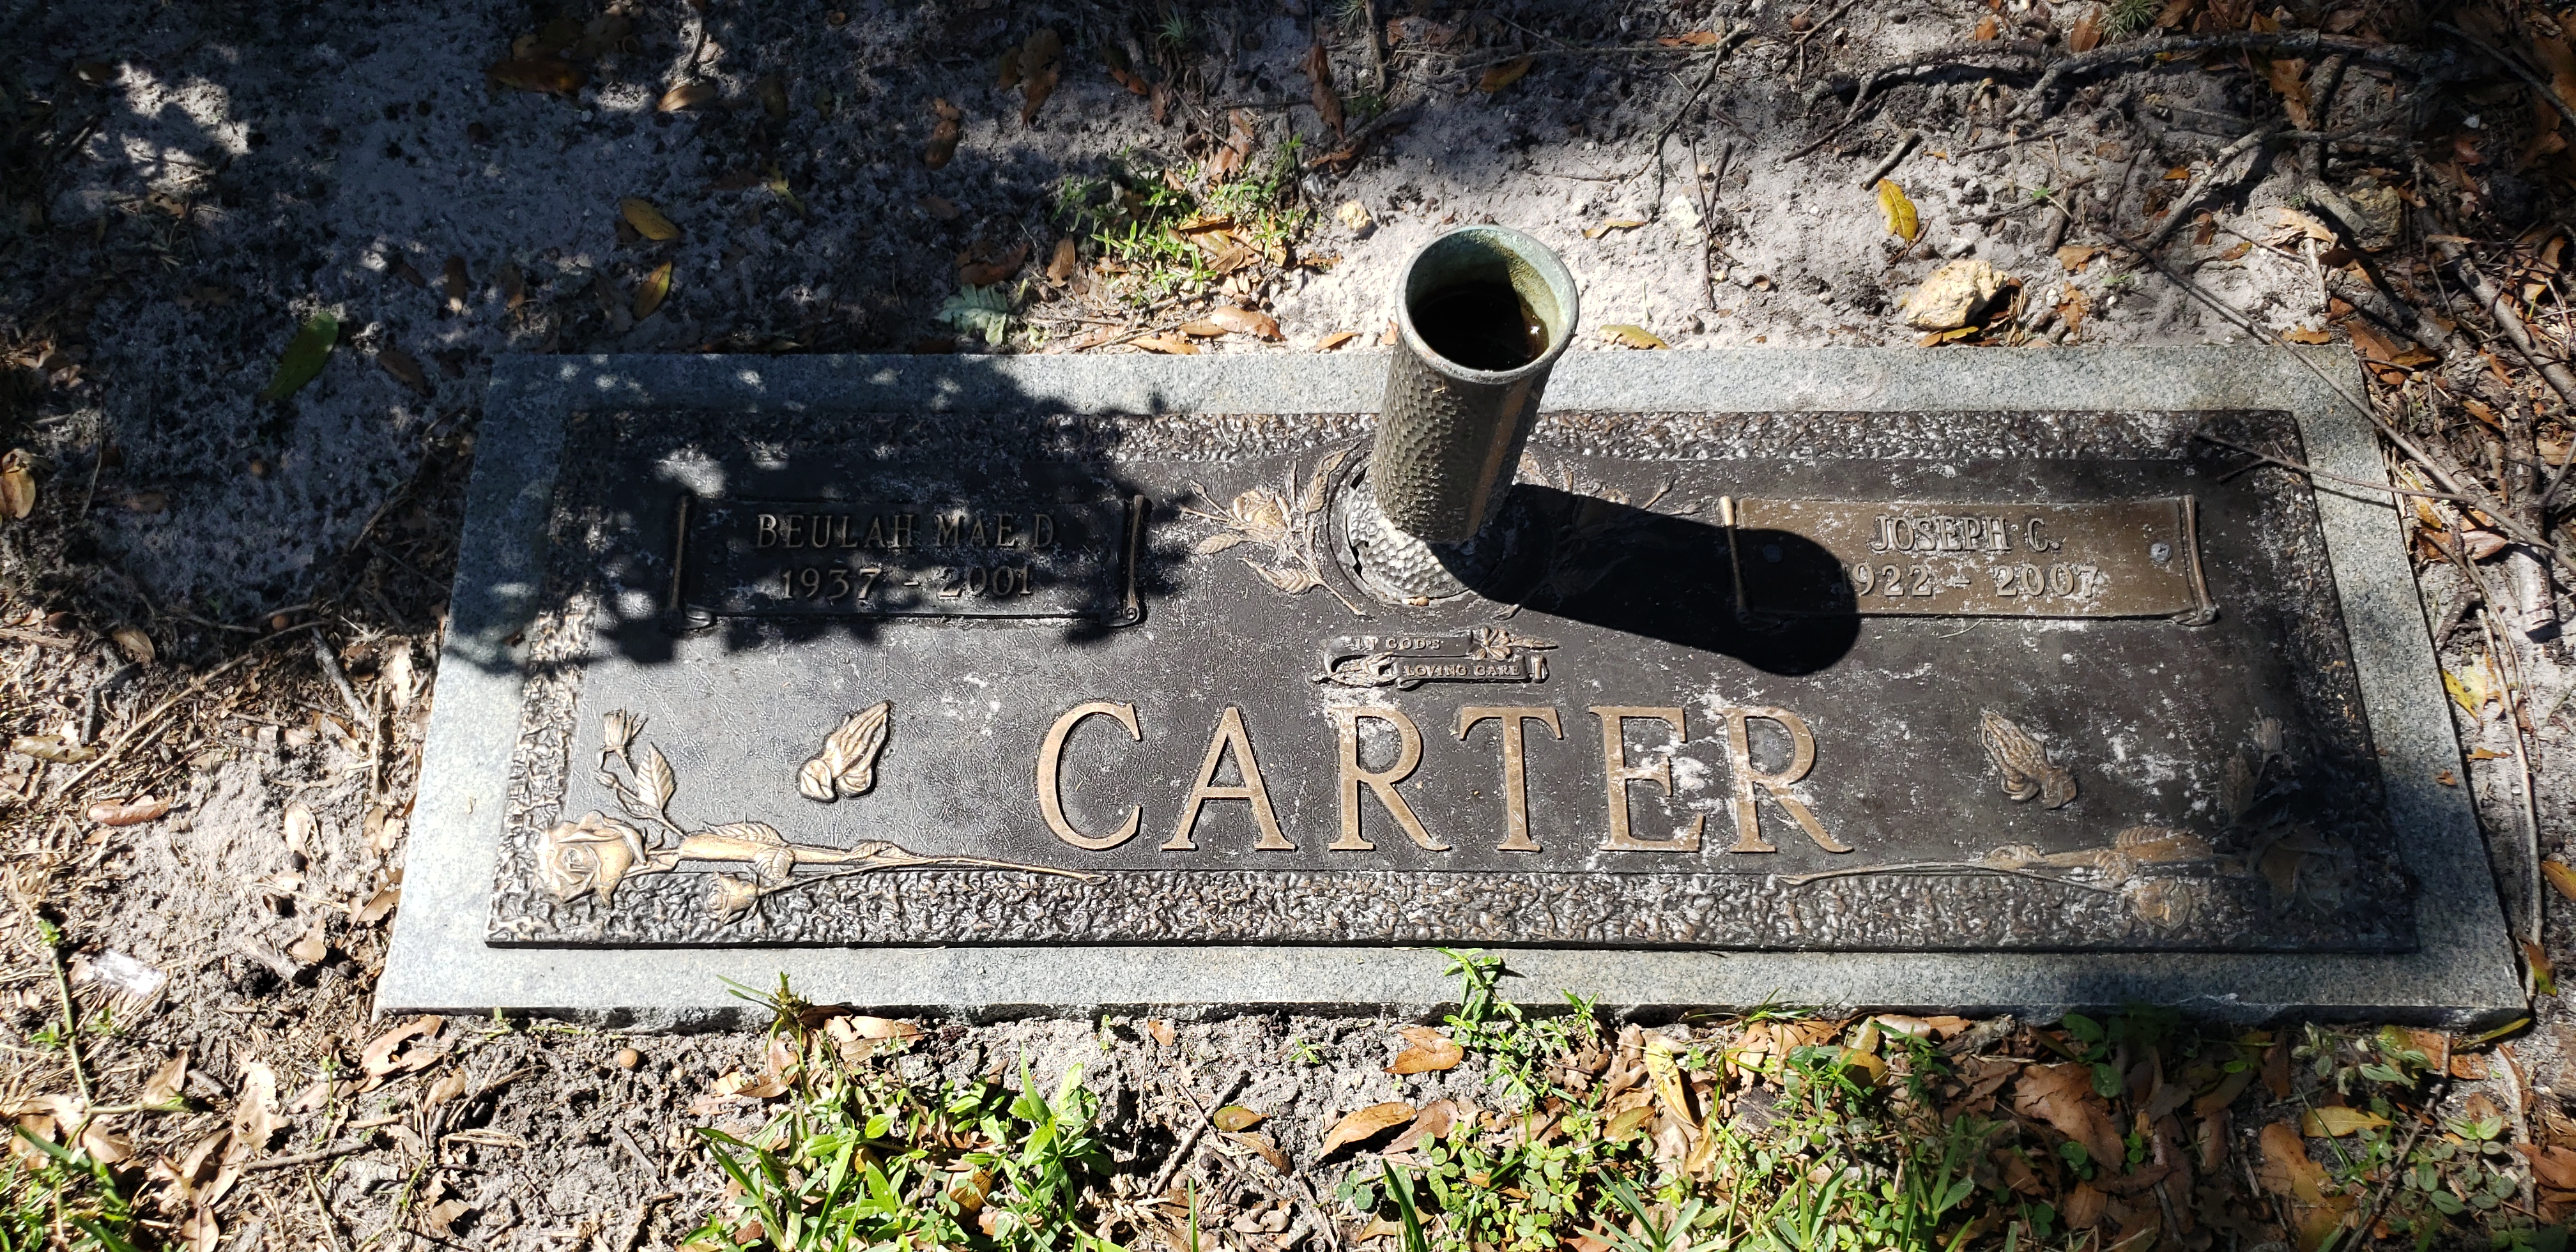 Joseph C Carter